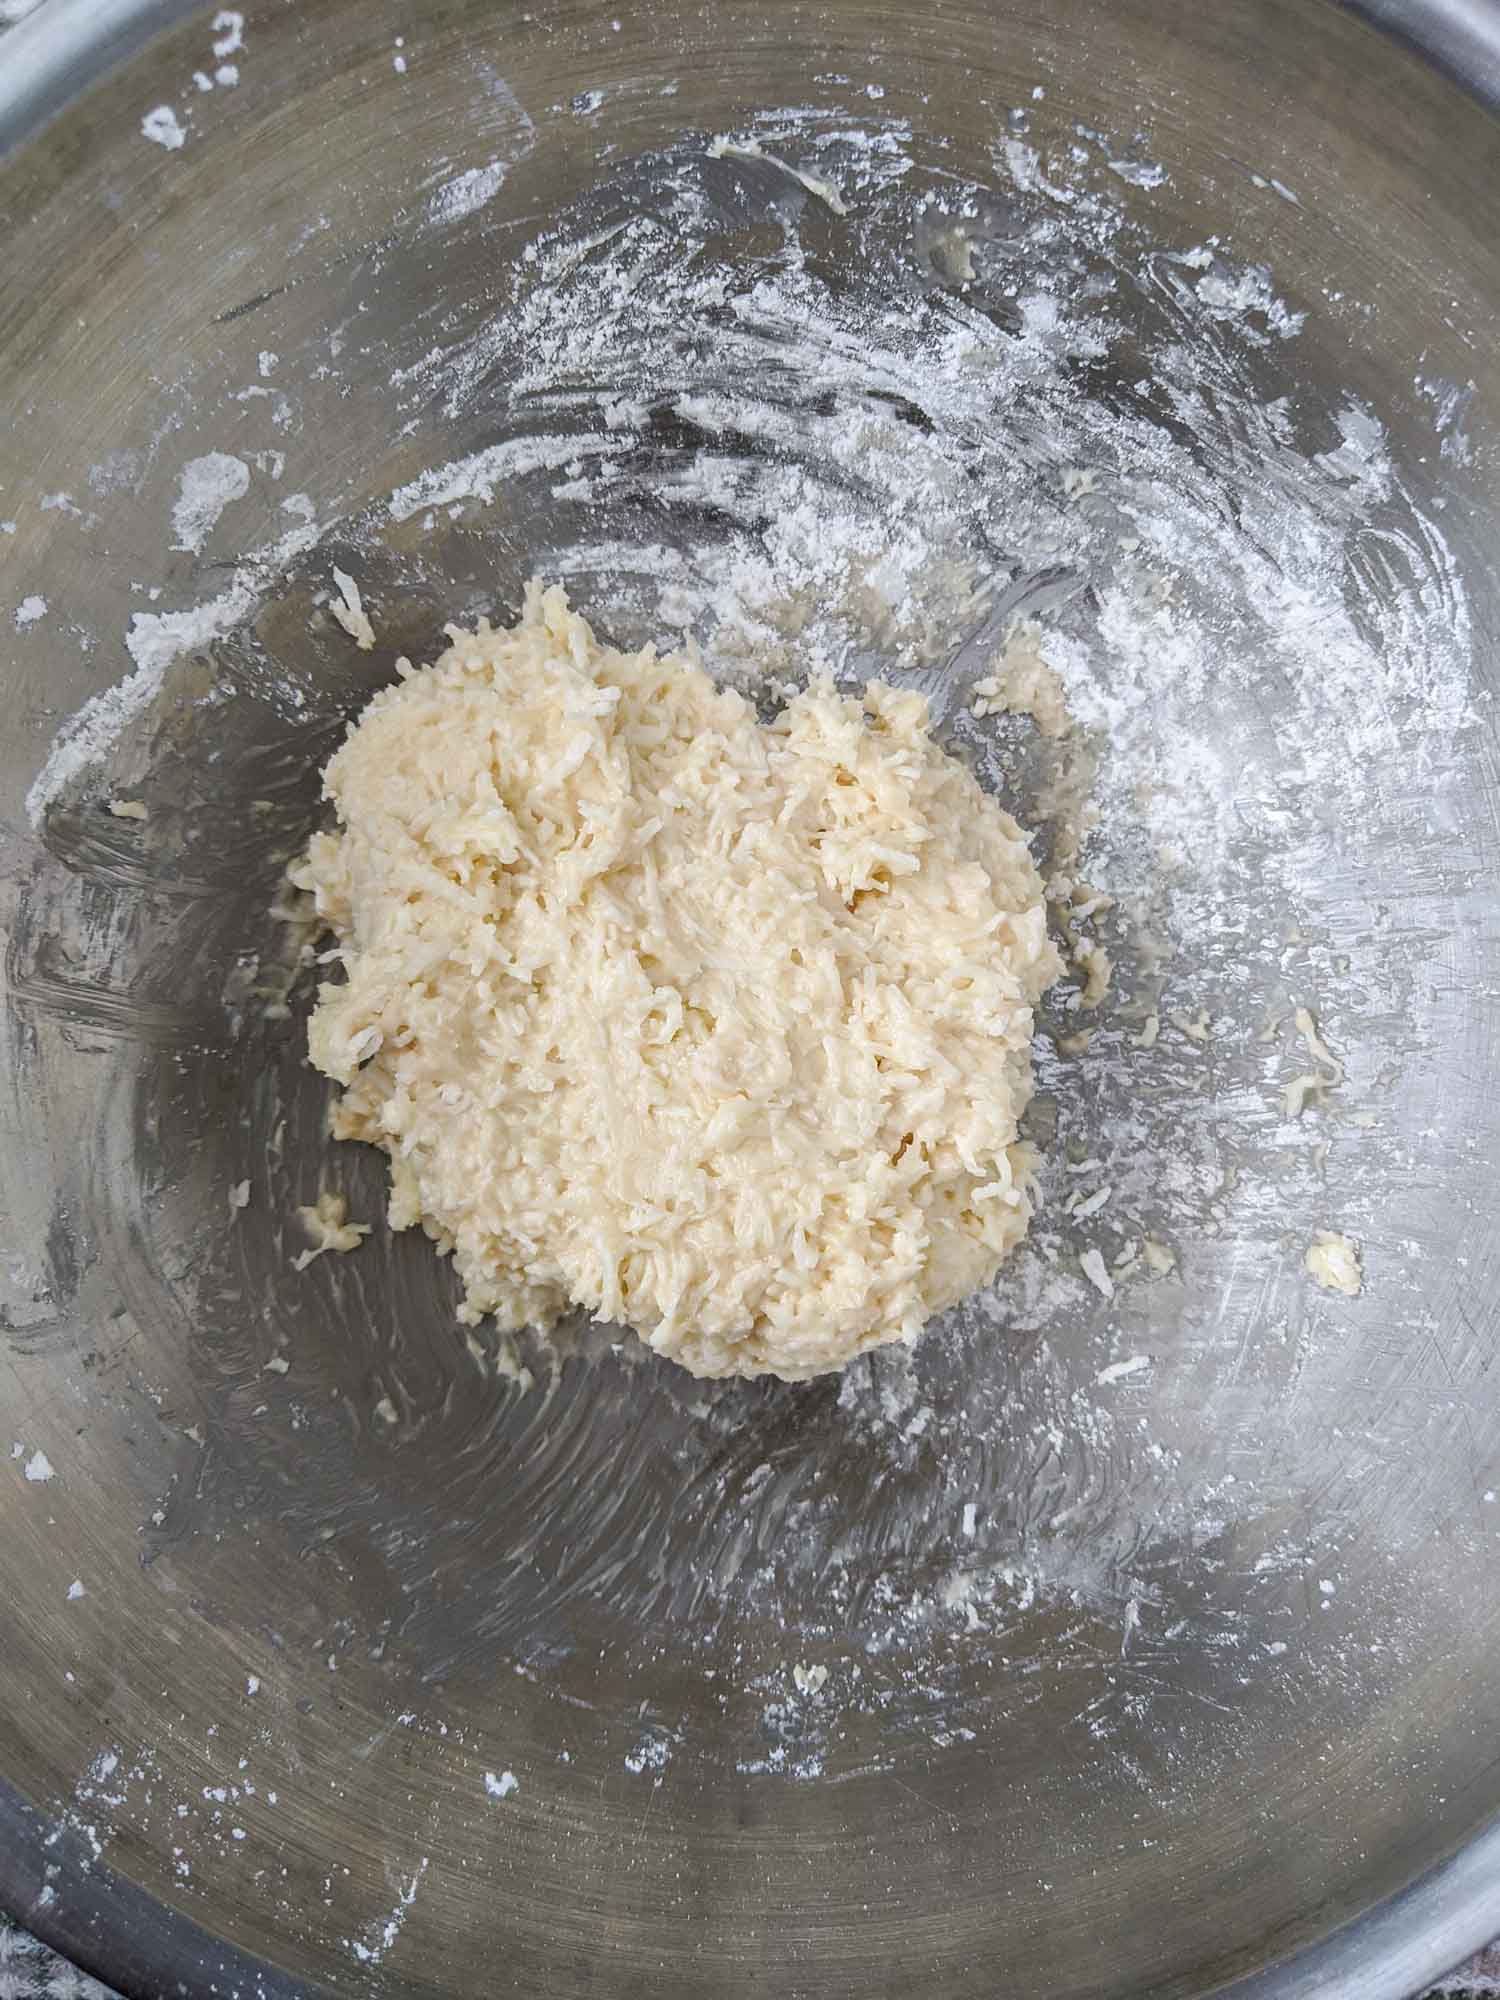 Coconut cherry balls in process shot, mixing dough